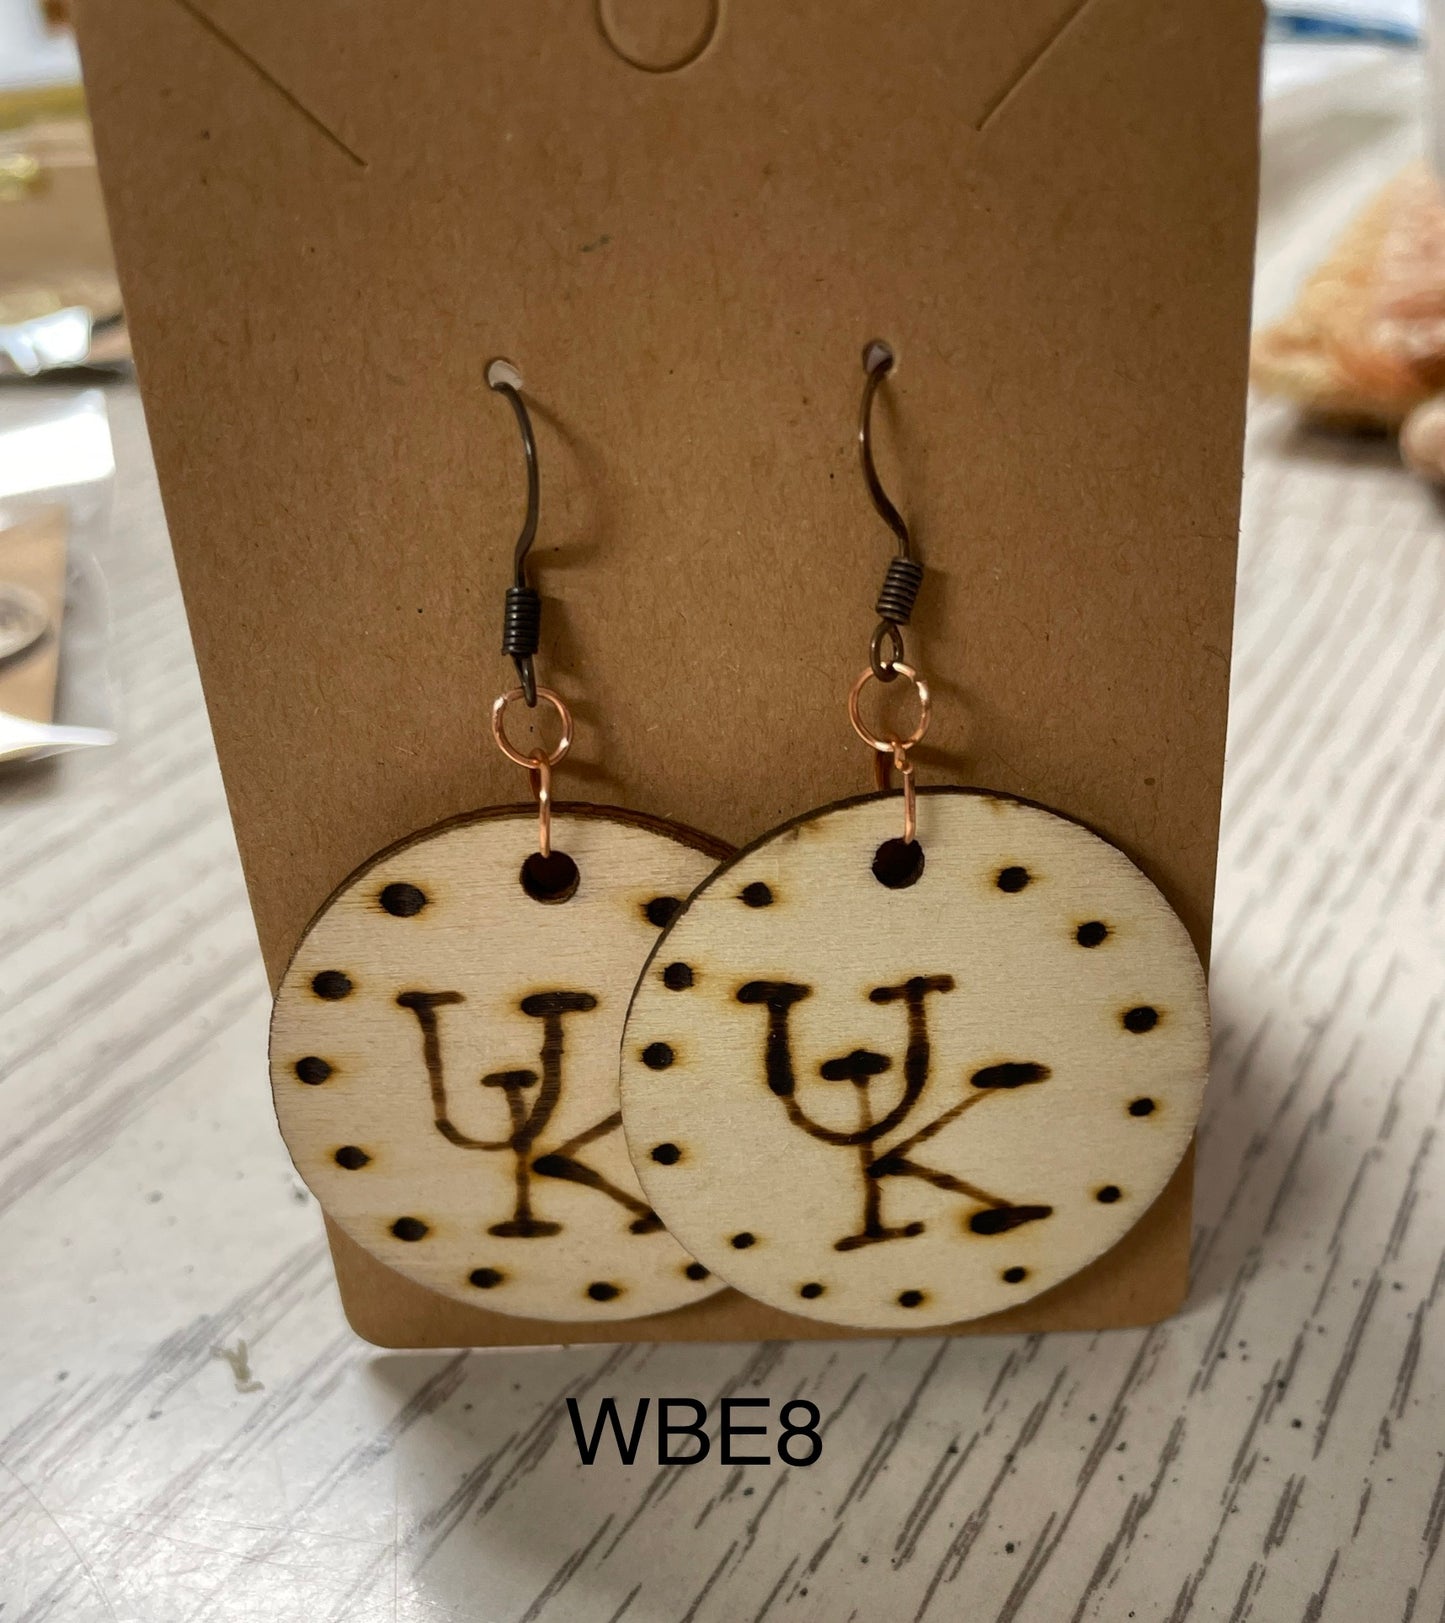 Wood burned UK earrings WBE8